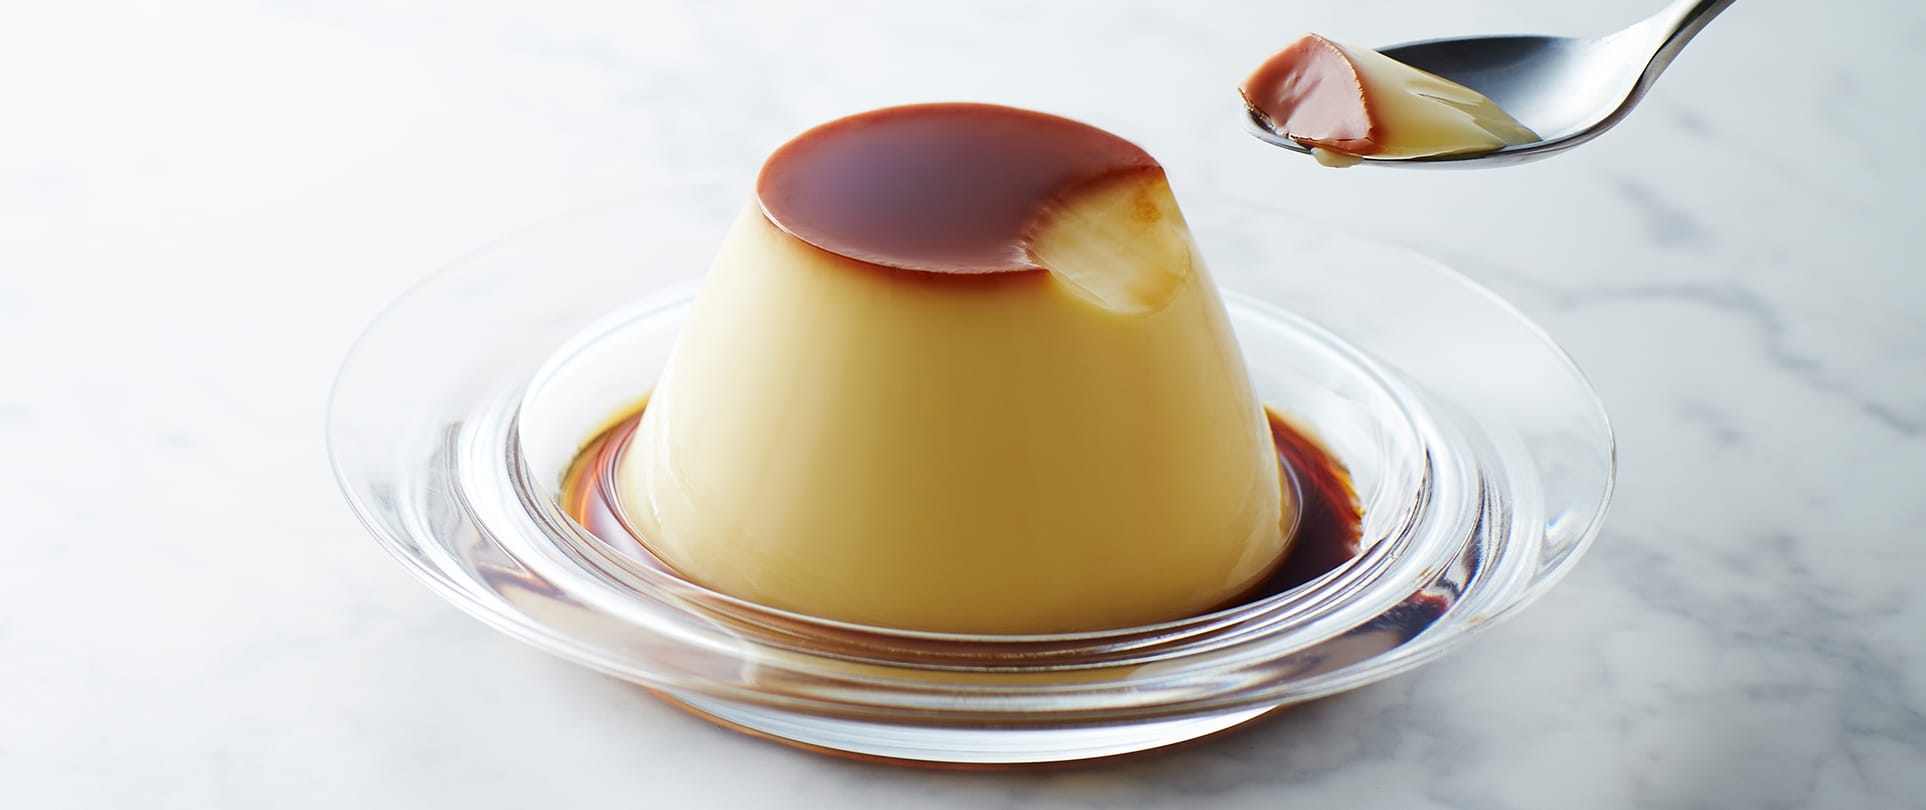 Quality of Morozoff Custard Pudding